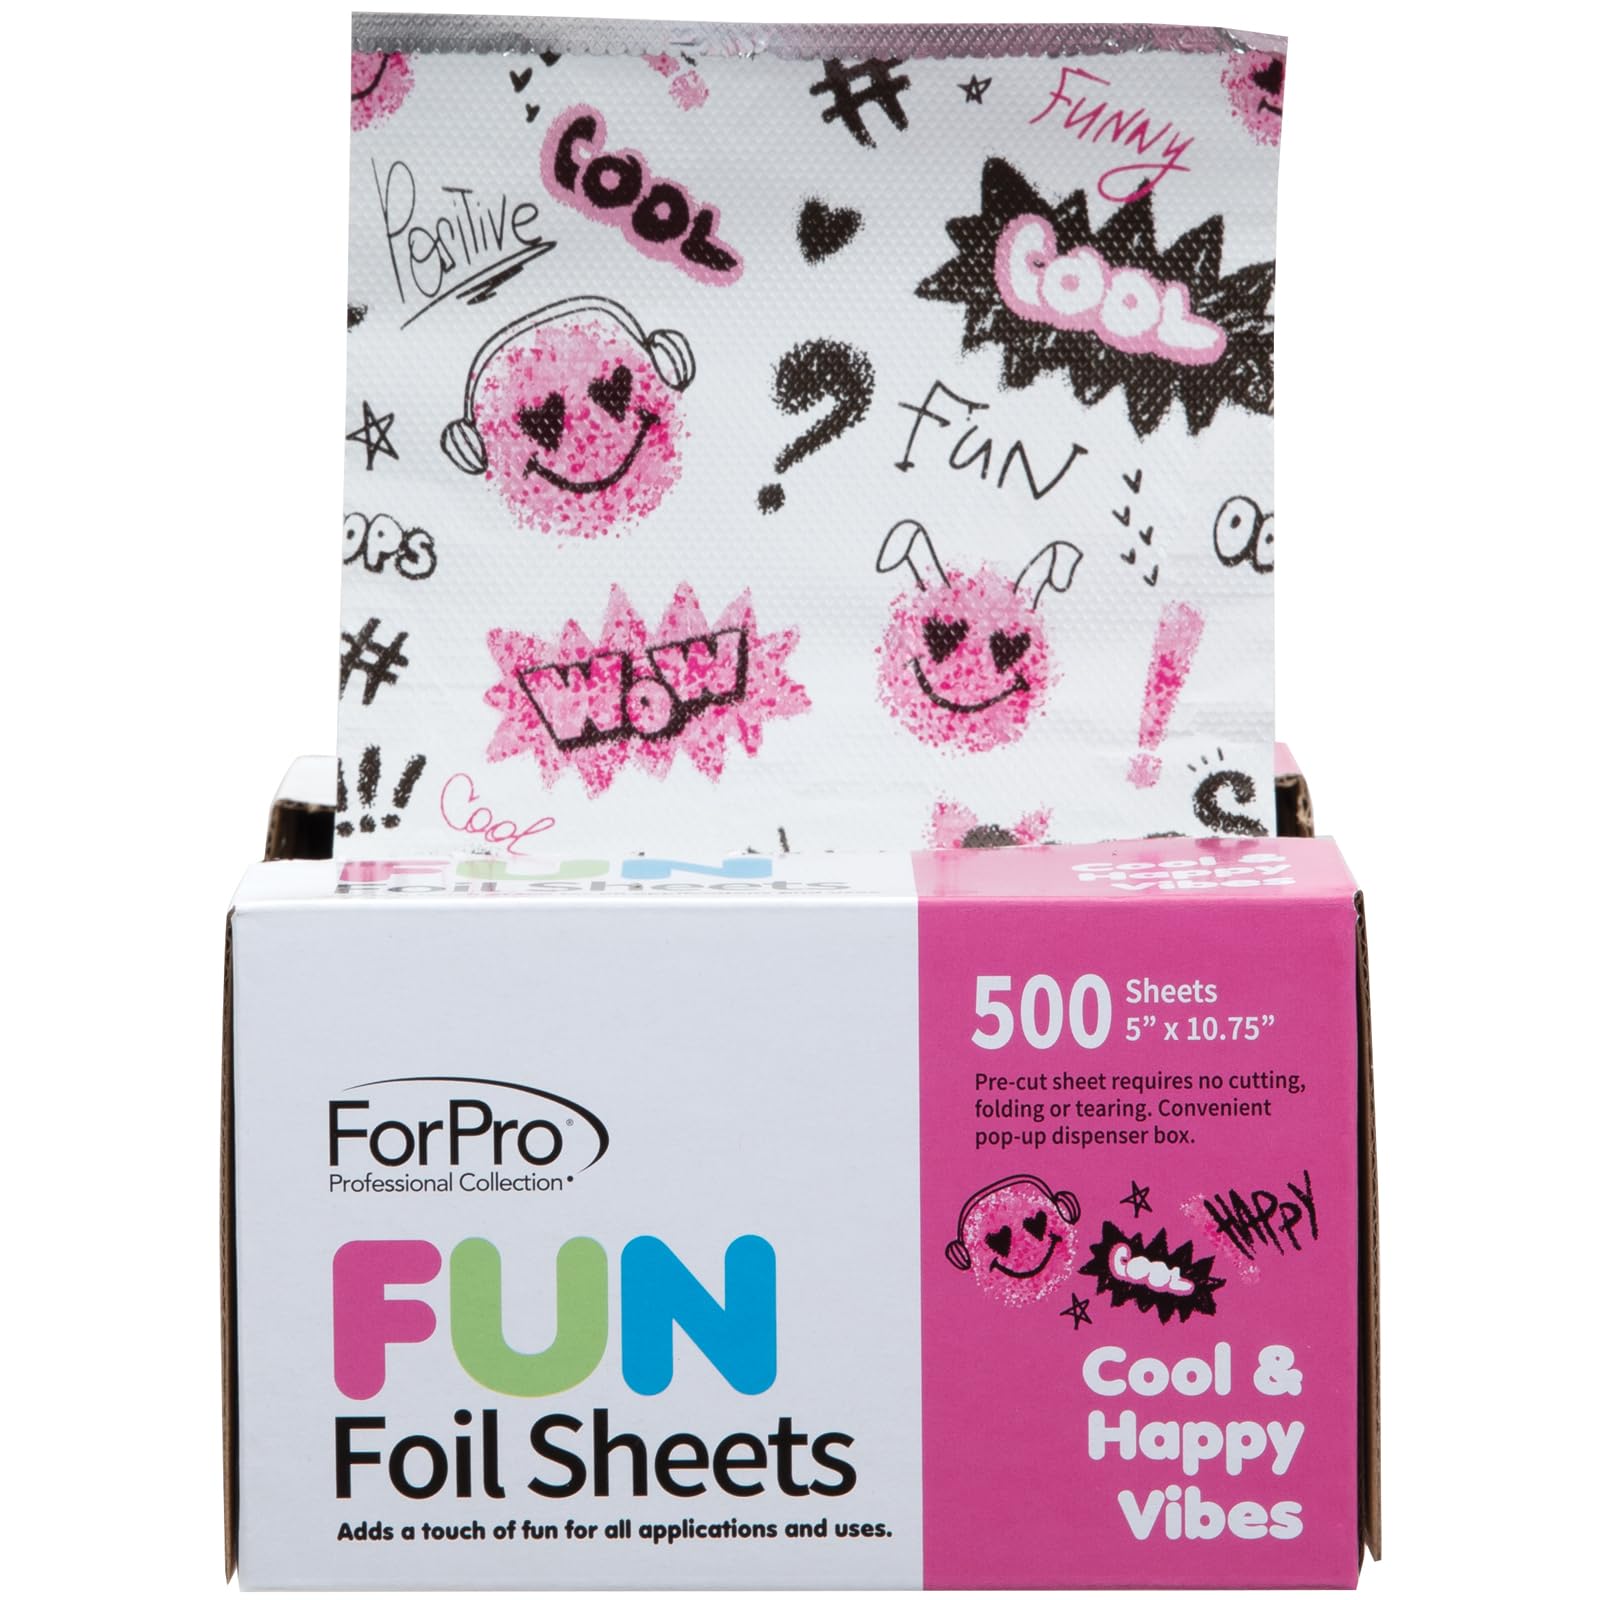 ForPro FUN Cool & Happy Vibes Foil Sheets, Aluminum Foil, Pop-Up Foil Dispenser, Hair Foils for Color Application and Highlighting Services, Food Safe, 5” W x 10.75” L, 500-Count